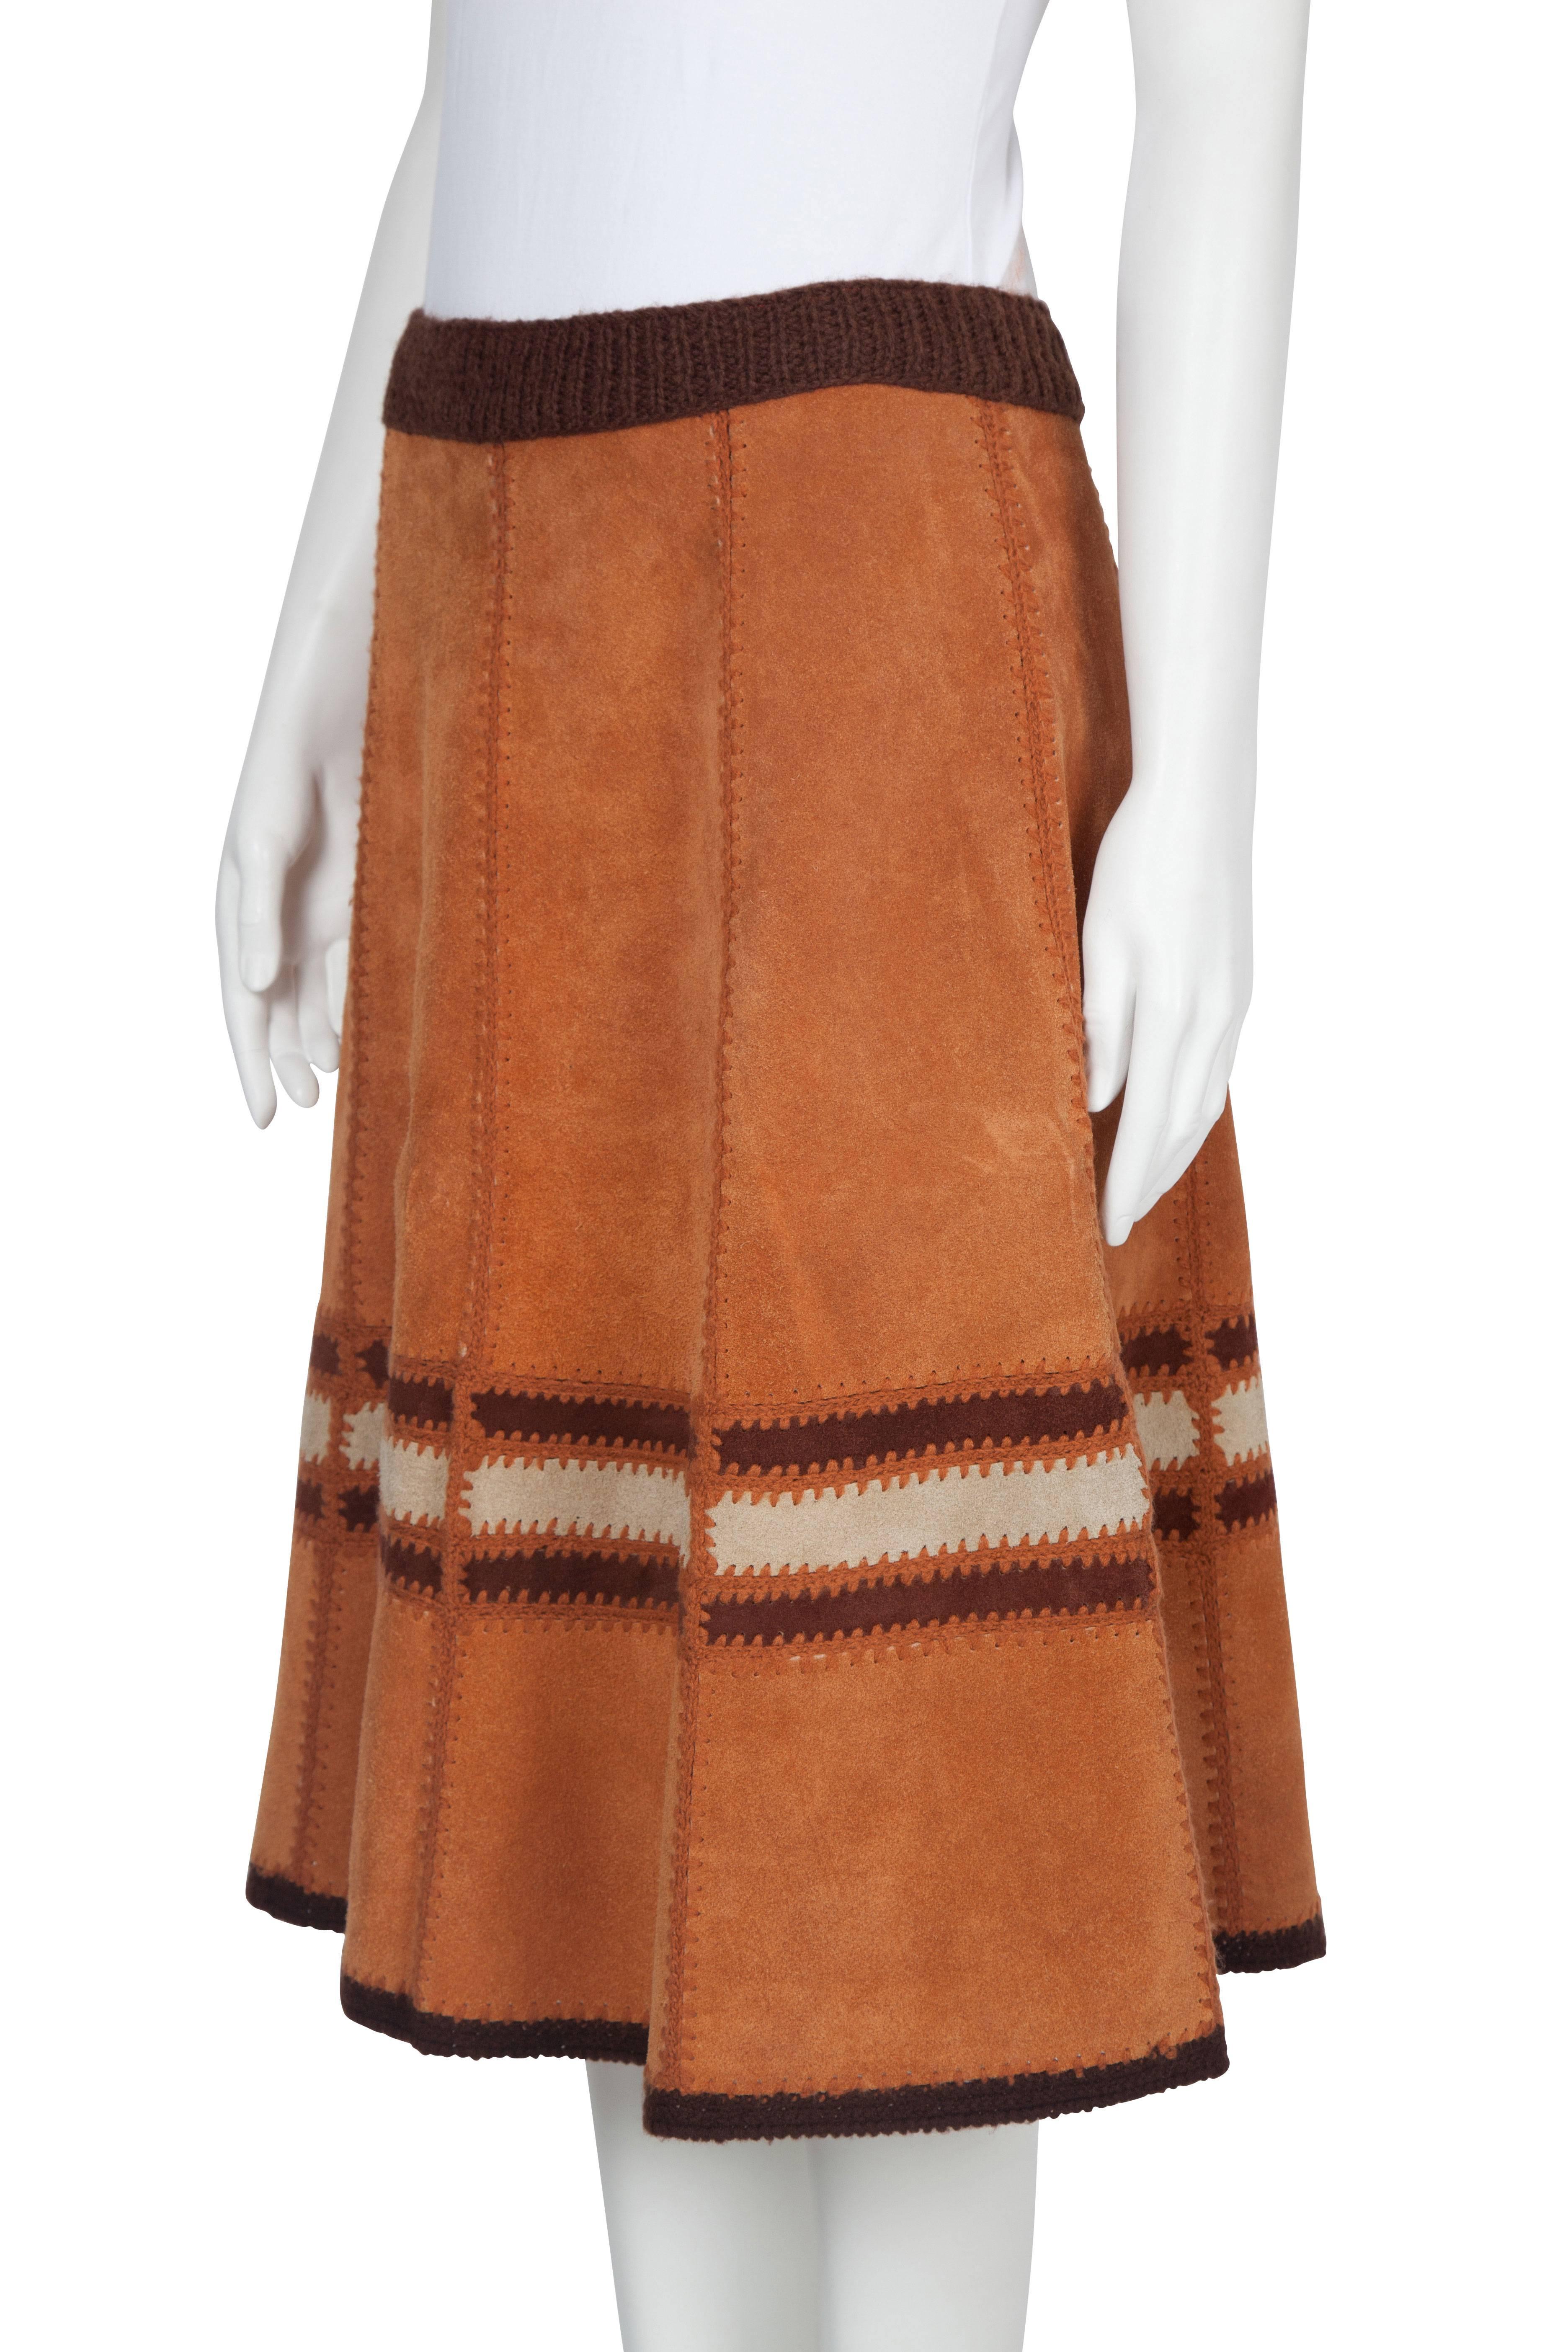 Women's 1960's Caramel Suede and Crochet Stich Skirt